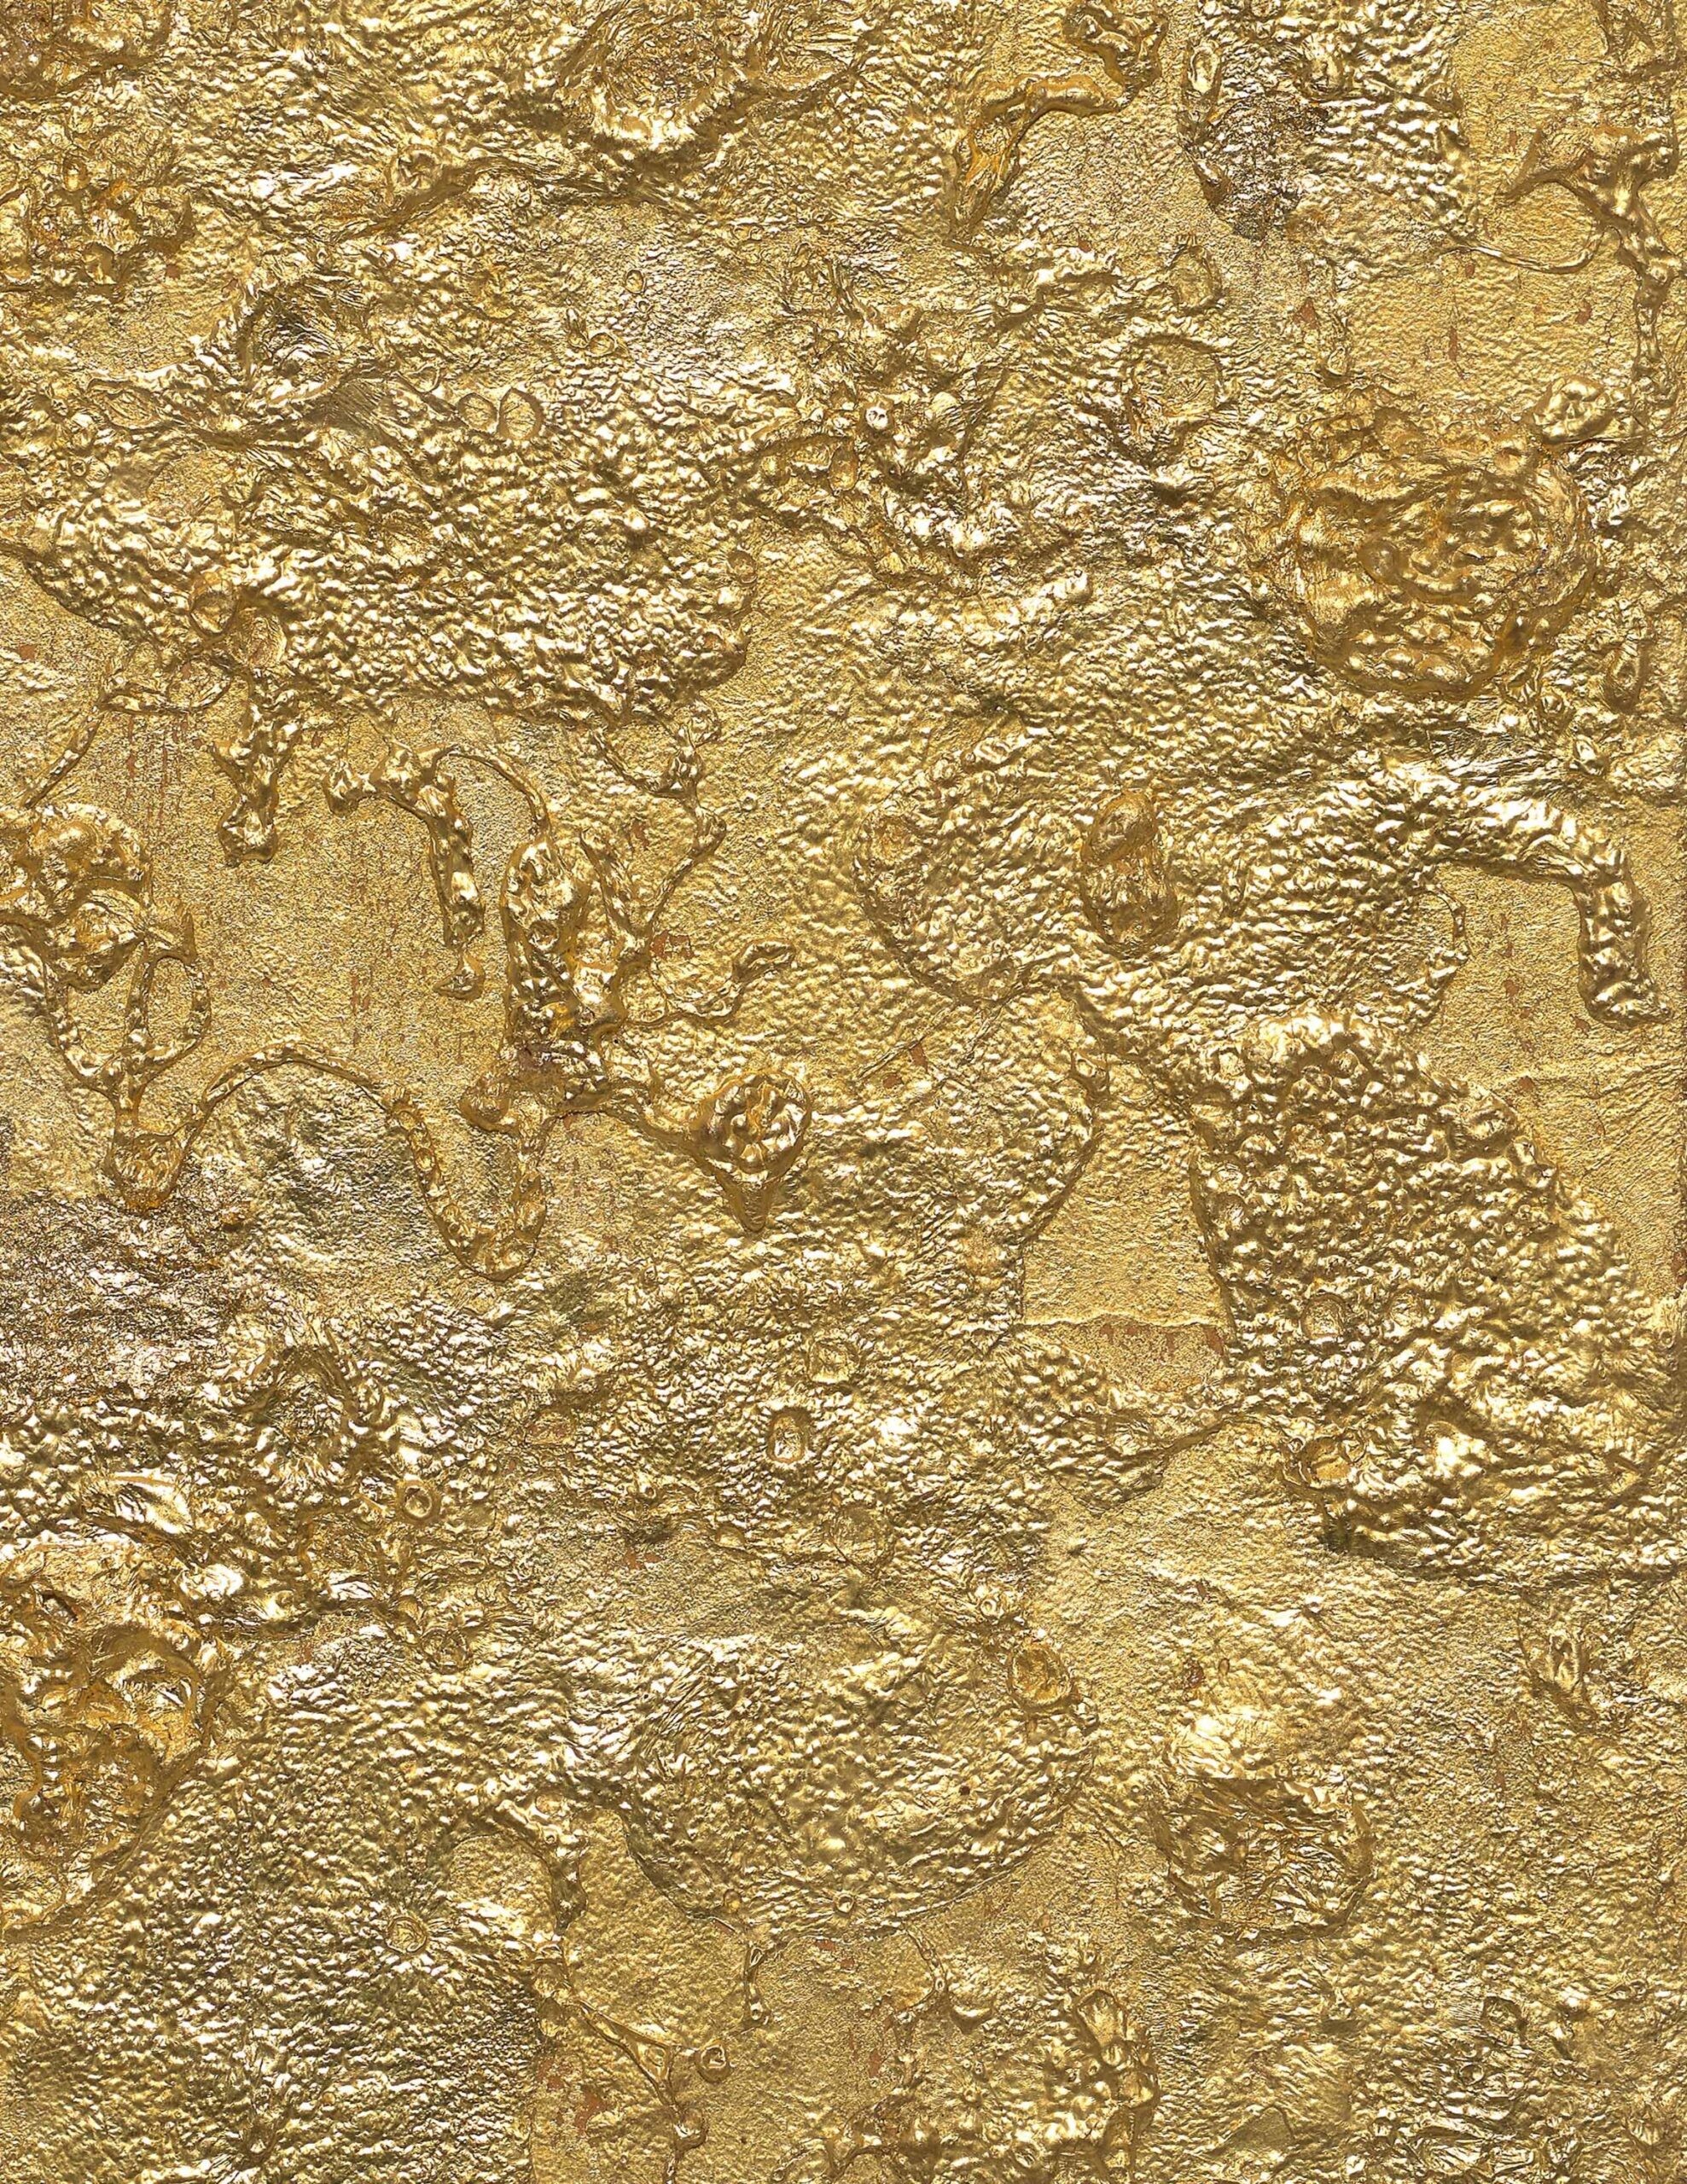 Gold Foil: Plaster pattern, Sotheby's Gallery, Art, Levy Gorvy, Golden separation. 1980x2560 HD Wallpaper.